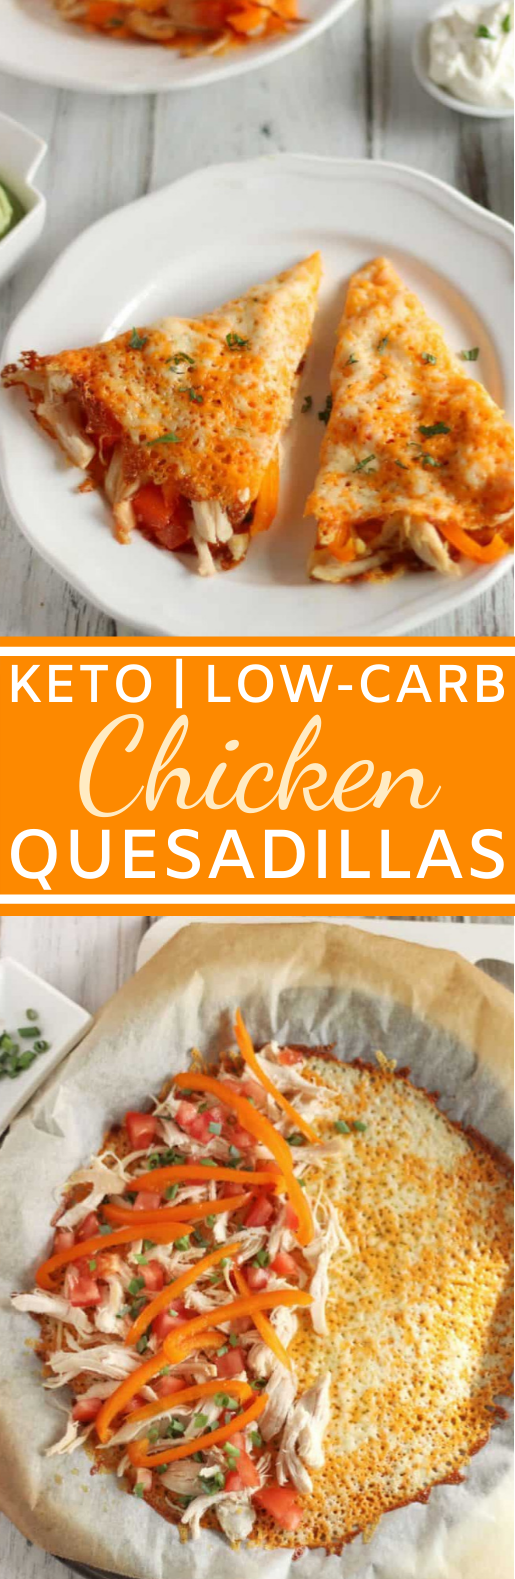 Keto Chicken Quesadilla #keto #lunch #lowcarb #dinner #quick